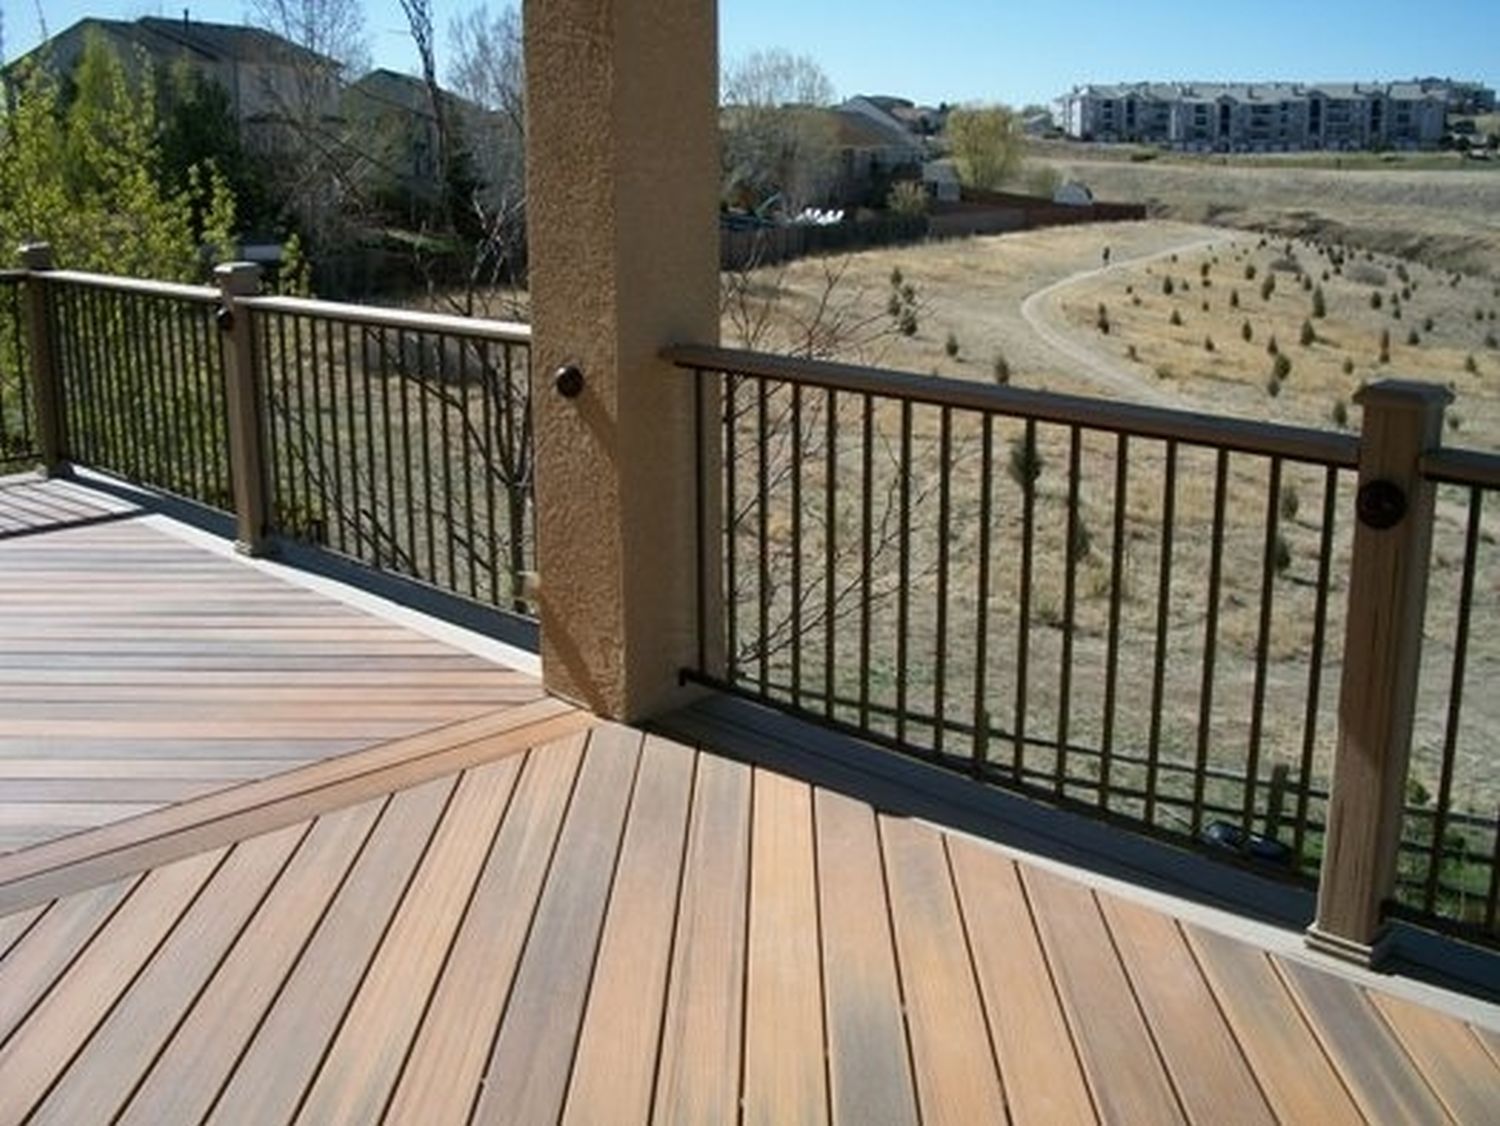 Composite deck with herringbone board design, a black metal railing, and deck cover.